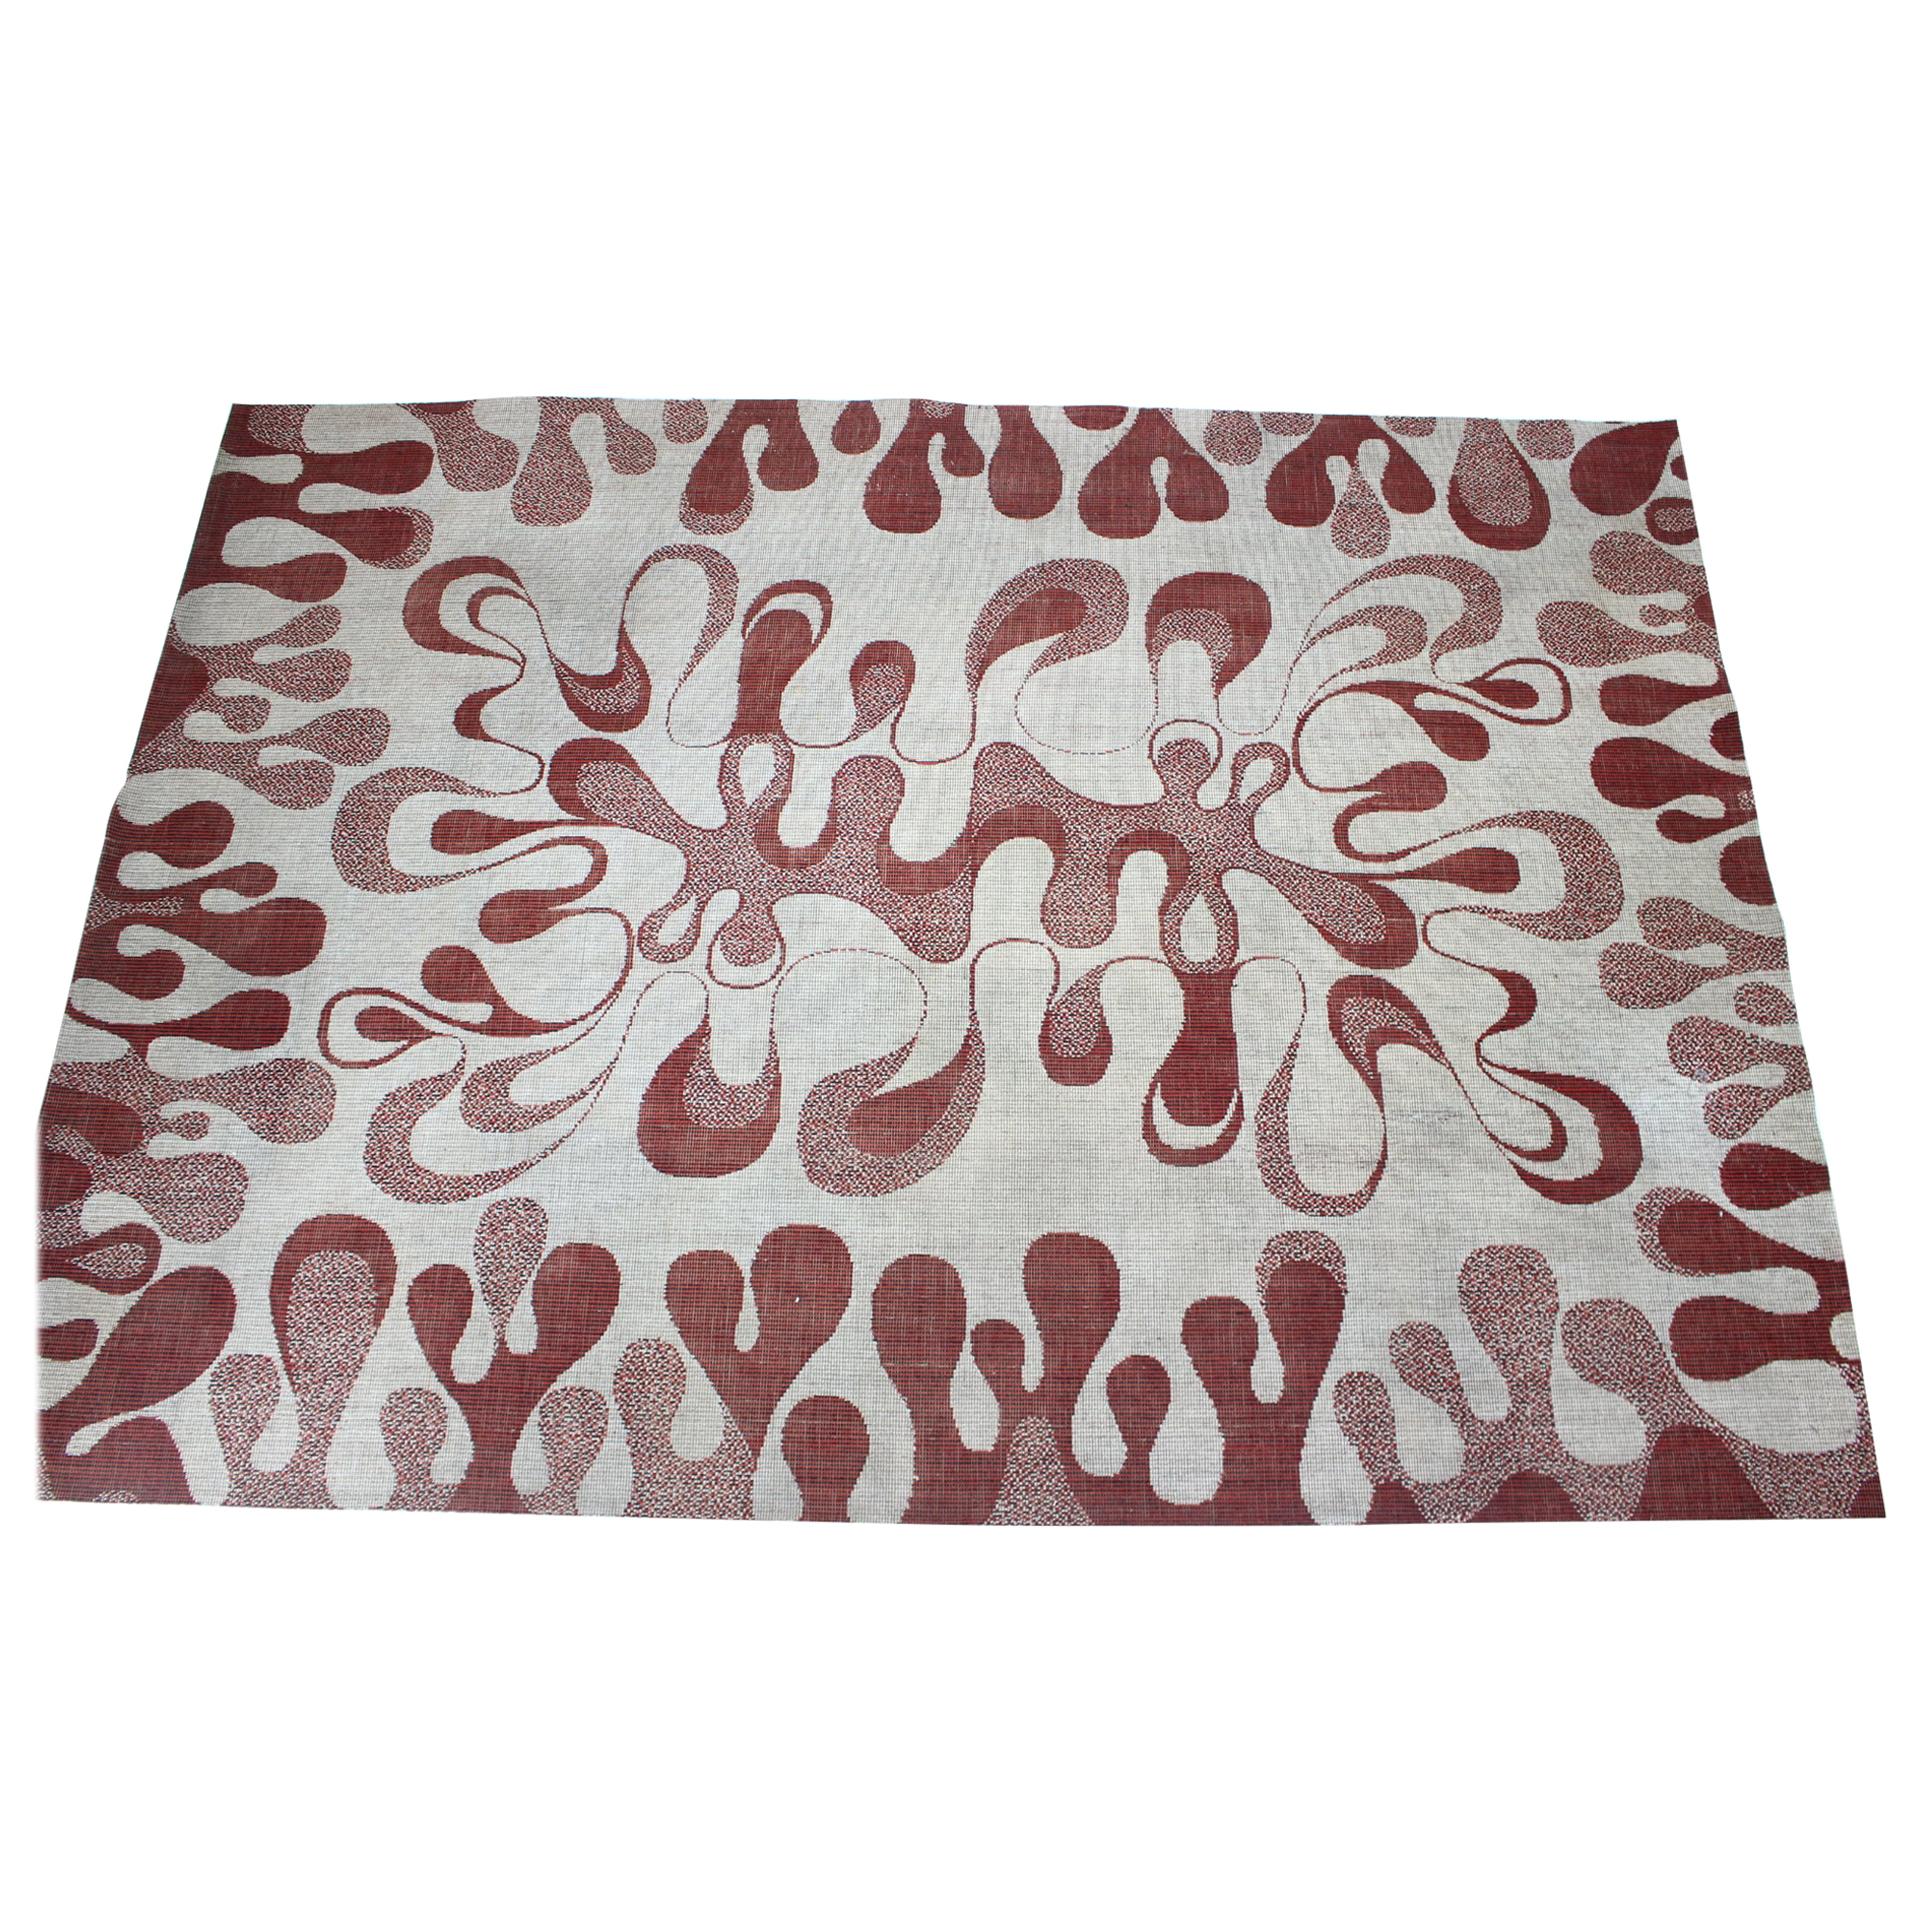 Abstract Organic Modernist Design Carpet / Rug, 1960s For Sale